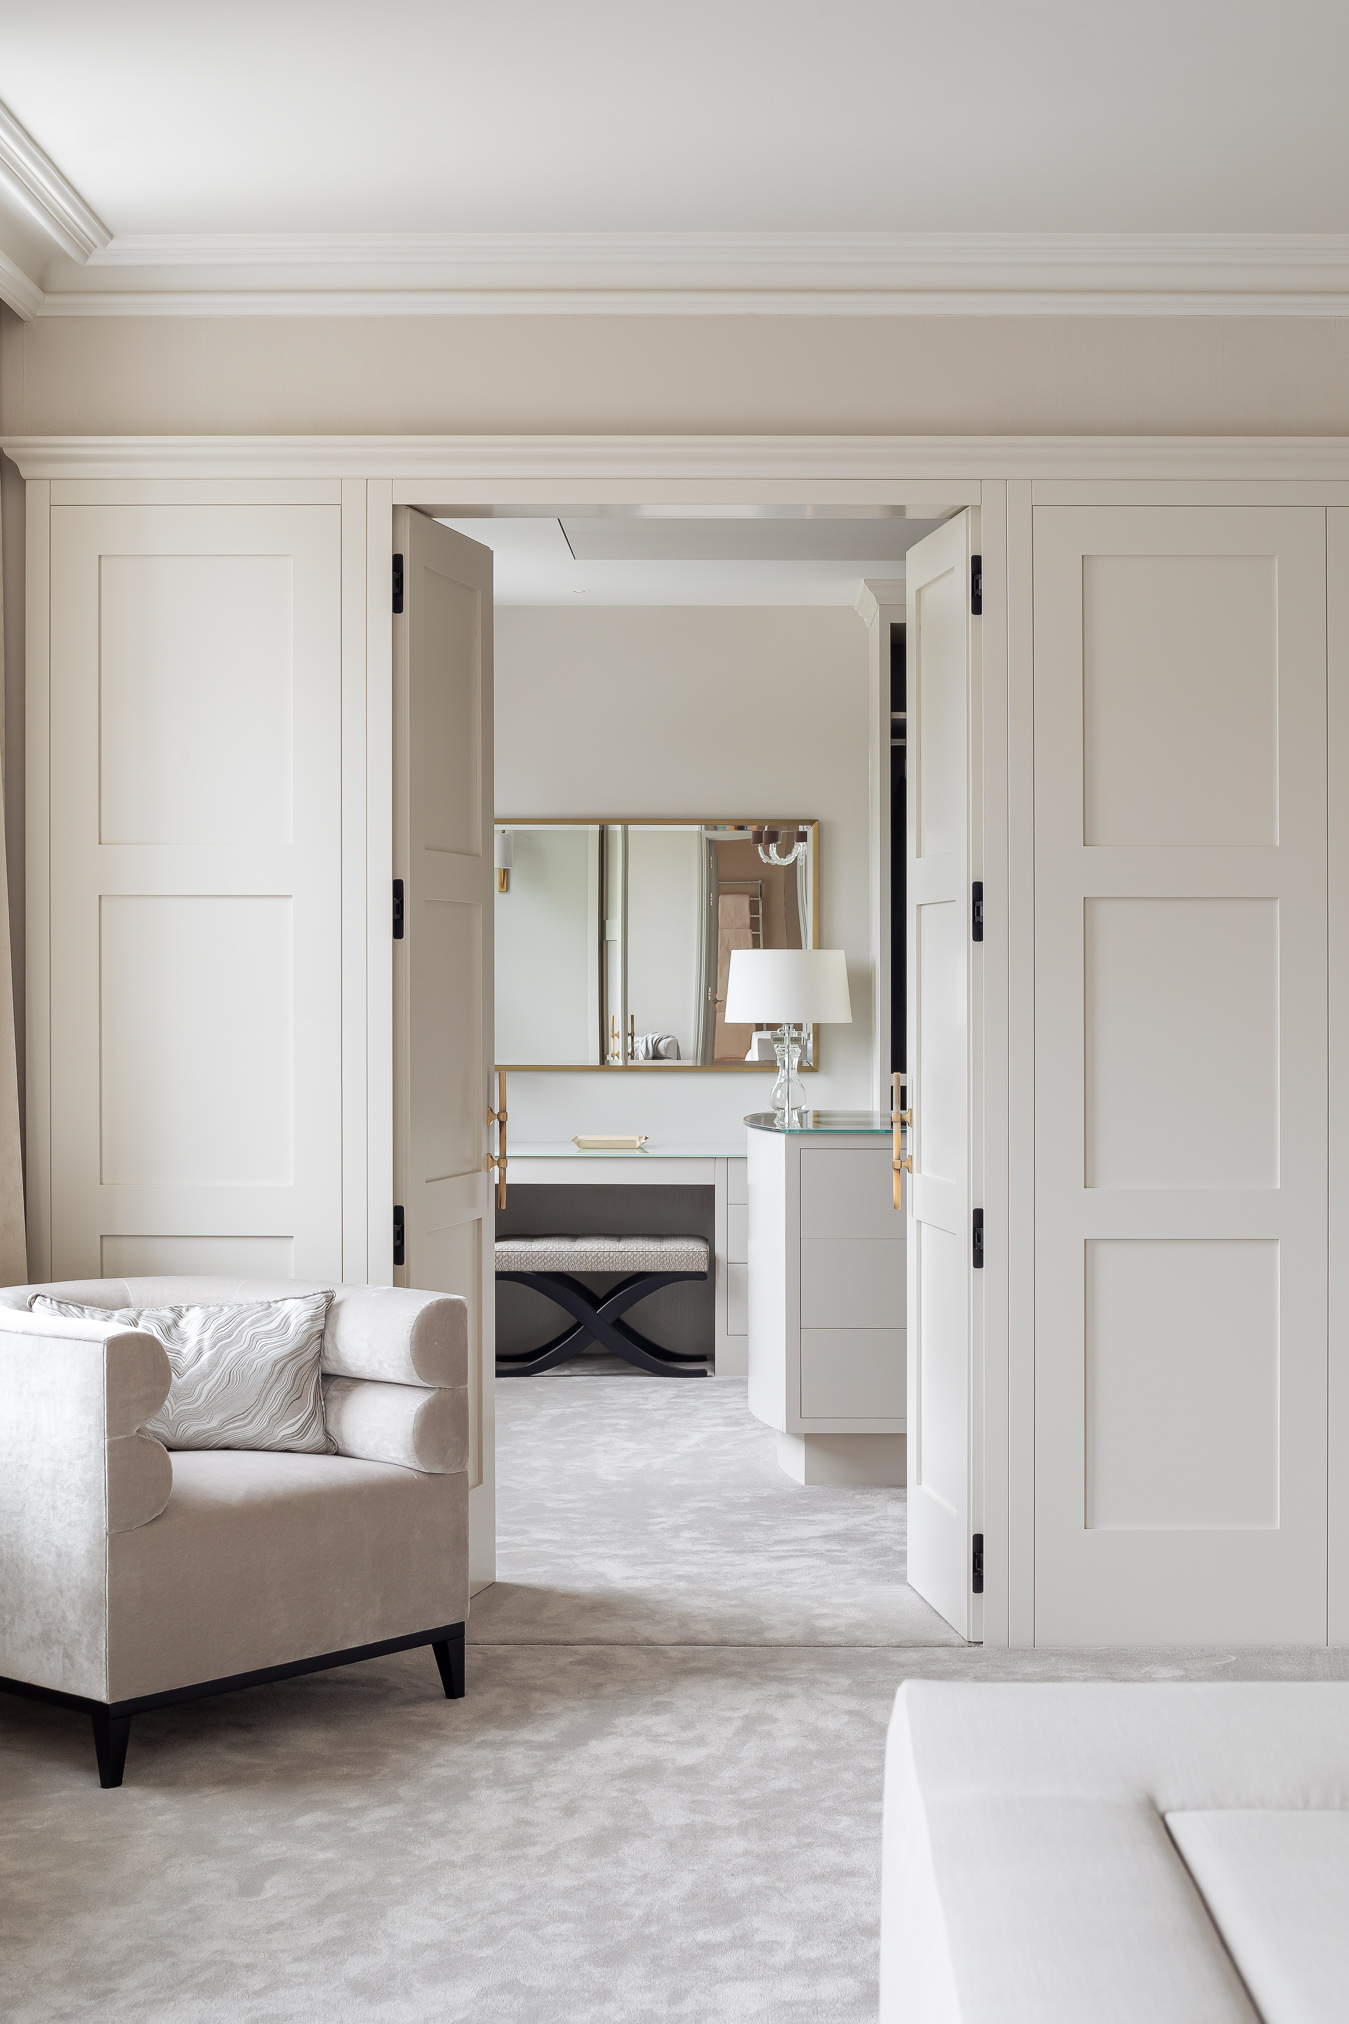 Disguised wardrobe doors in this luxurious bespoke bedroom design lead to the sophisticated dressing room beyond